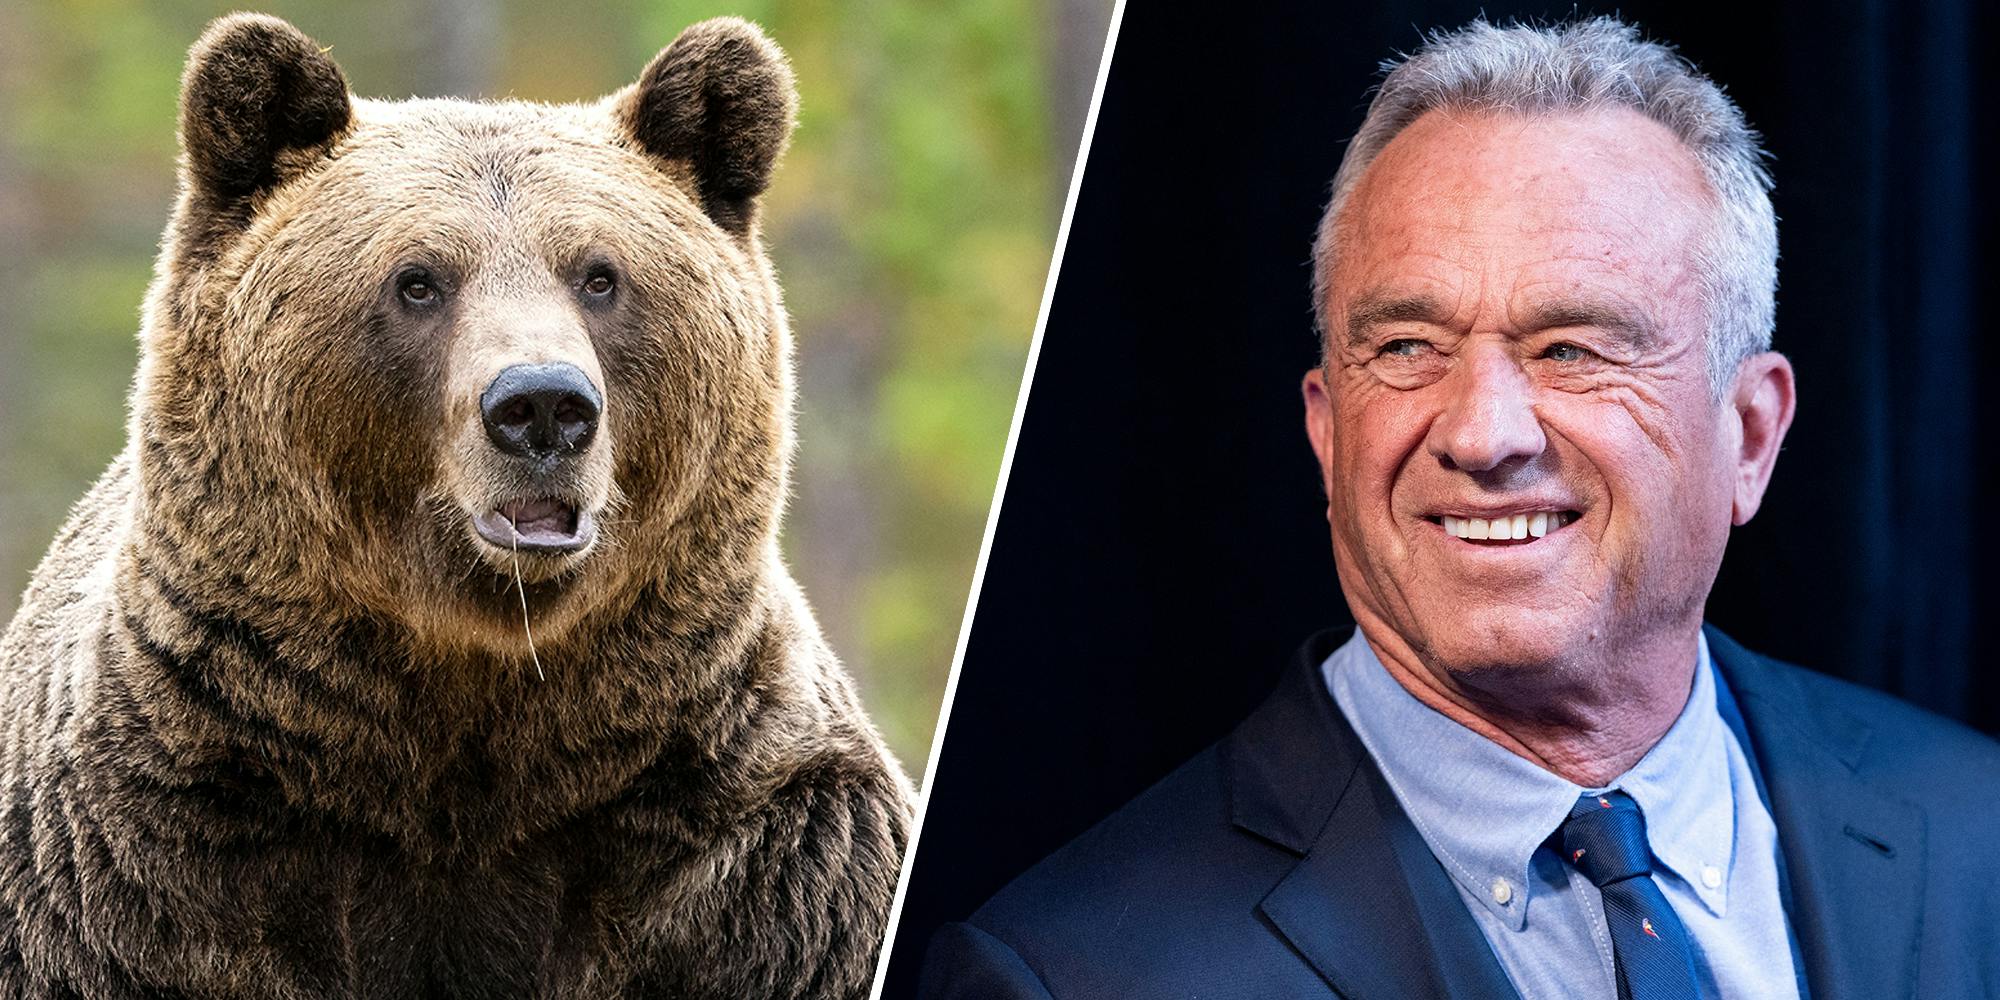 Internet explodes as mysterious Central Park bear cub culprit revealed to be RFK Jr.